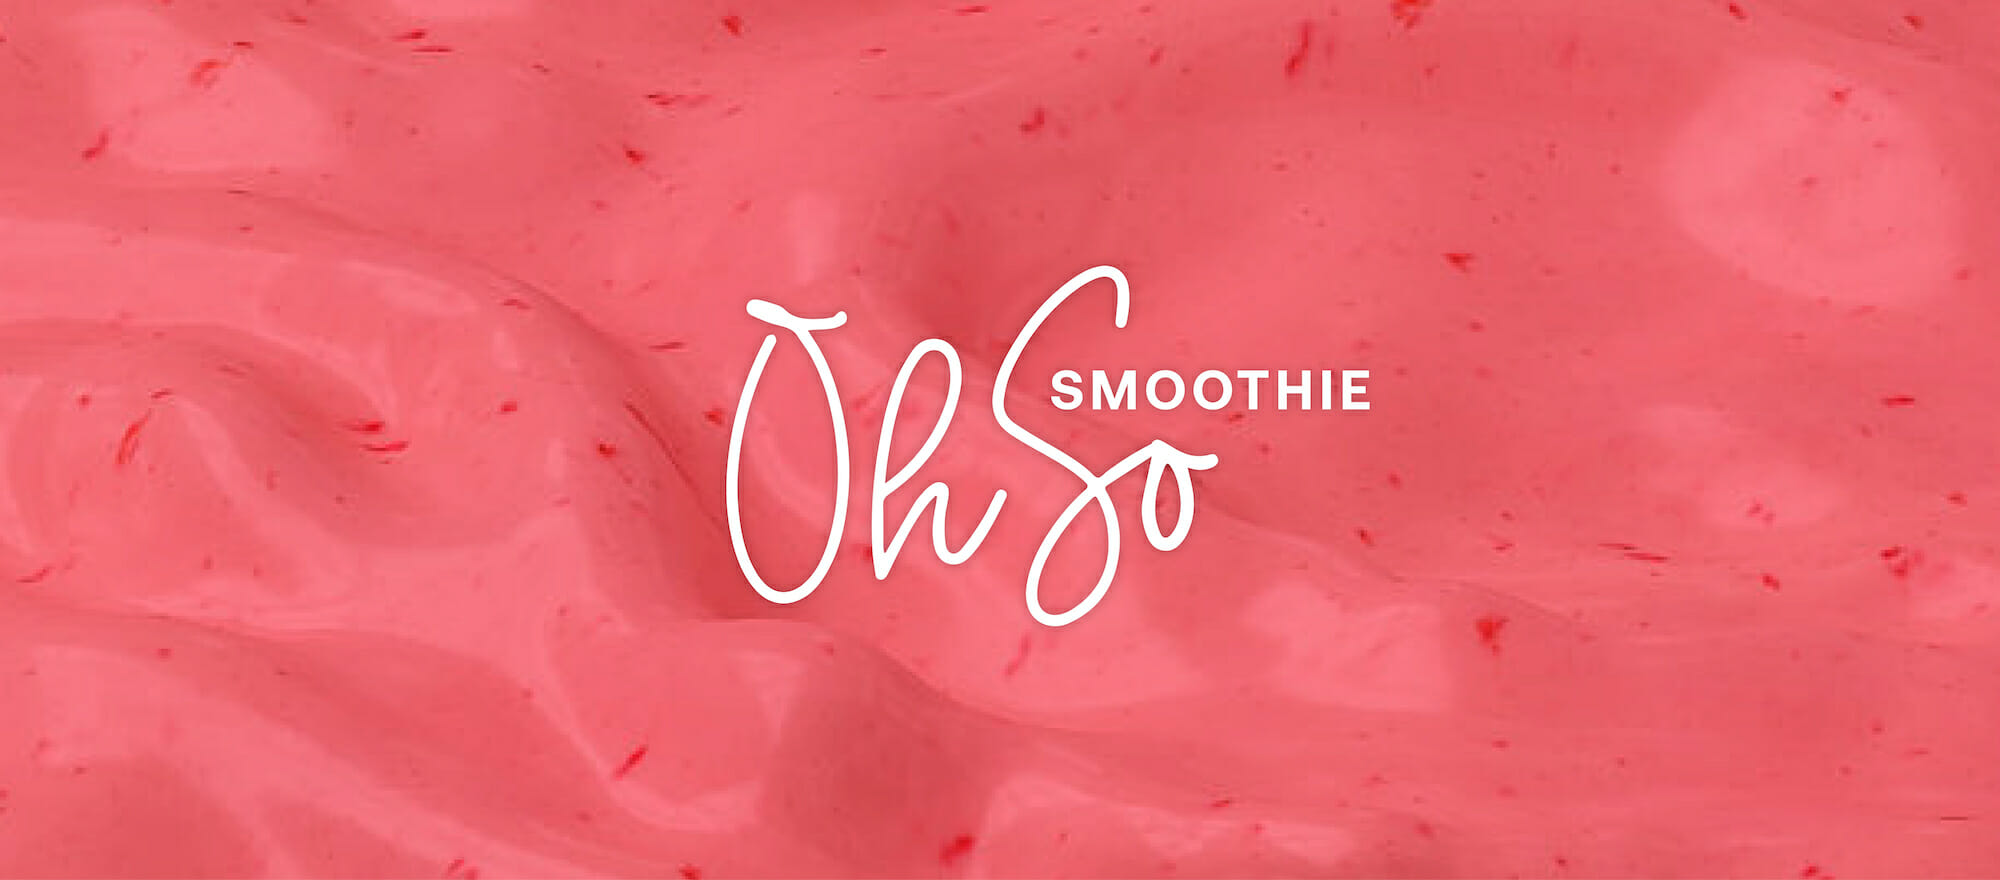 Oh So Smoothie branding, designed by Šek Design Studio